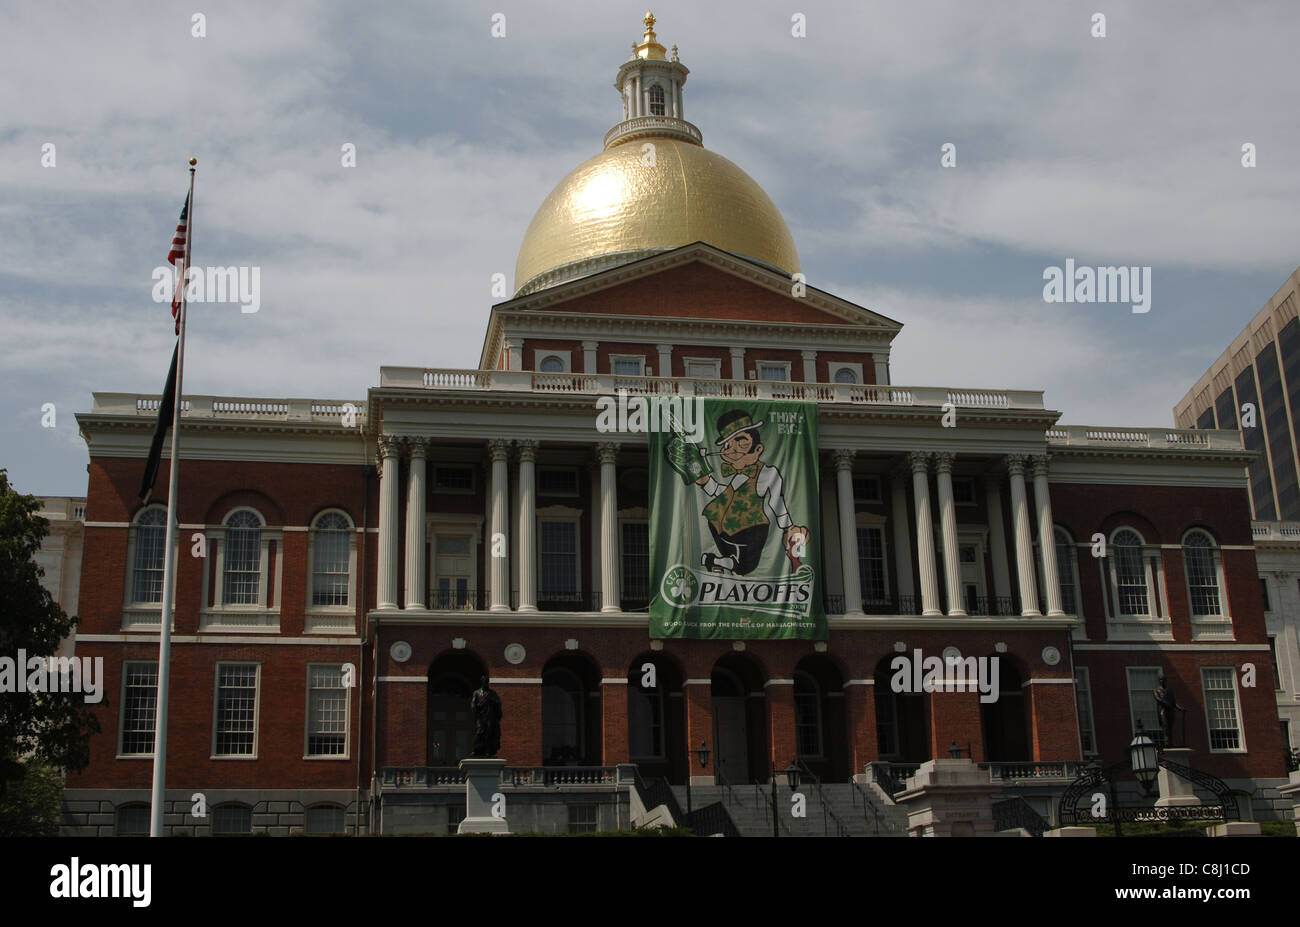 United States. Boston. Massachusetts. State House. 18th century. Designed by Charles Bulfinch. Stock Photo